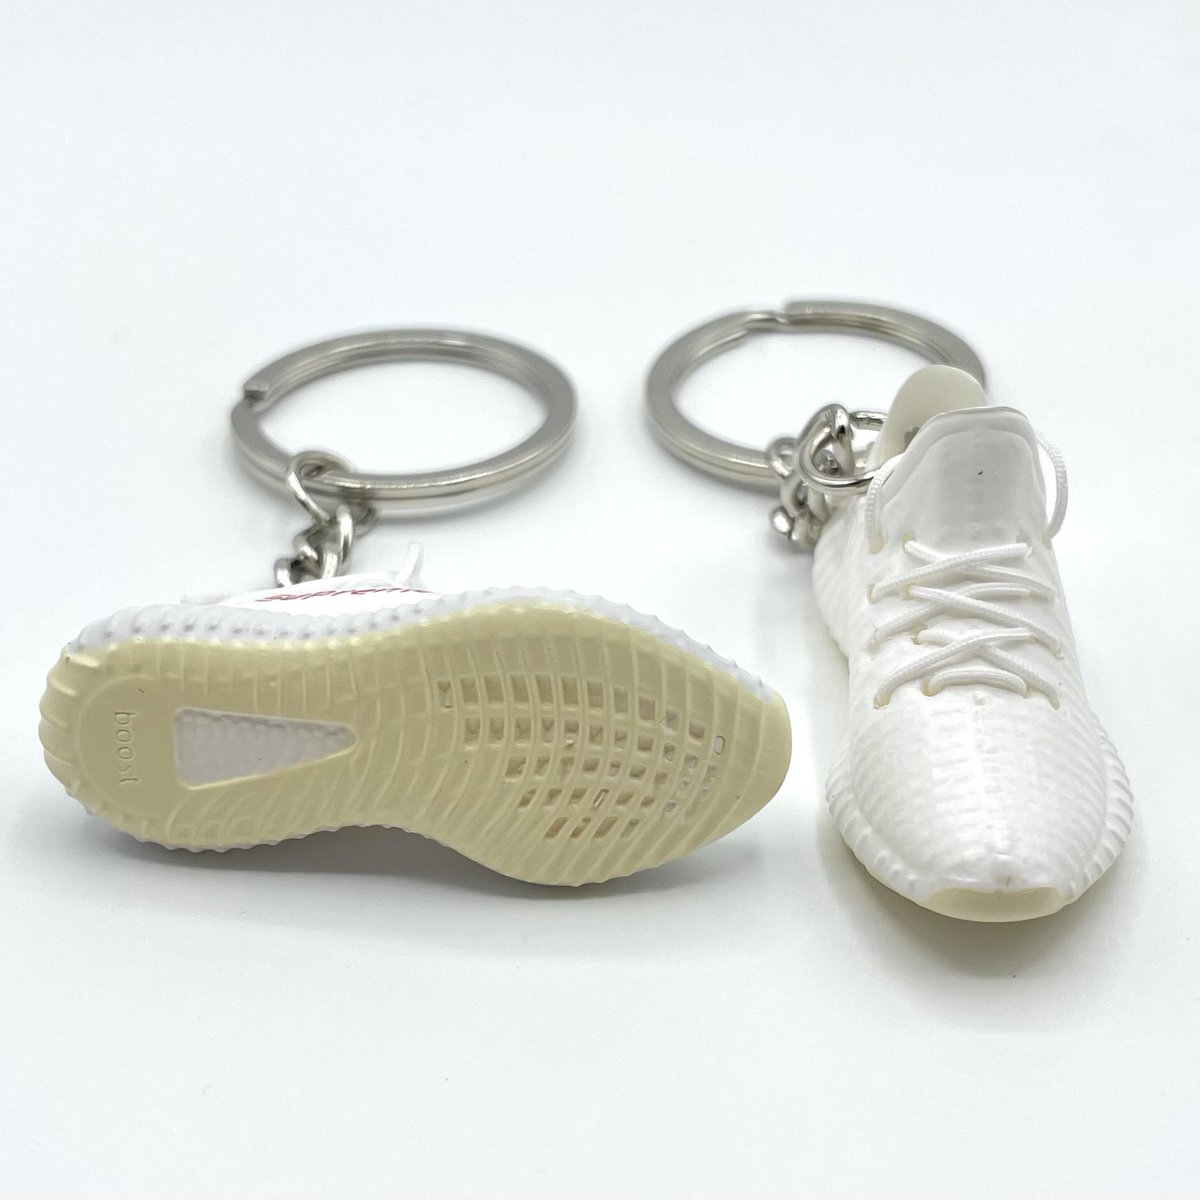 Yeezy 350 Boost x Supreme “White” #sneakerkeychain mvdeshop.com